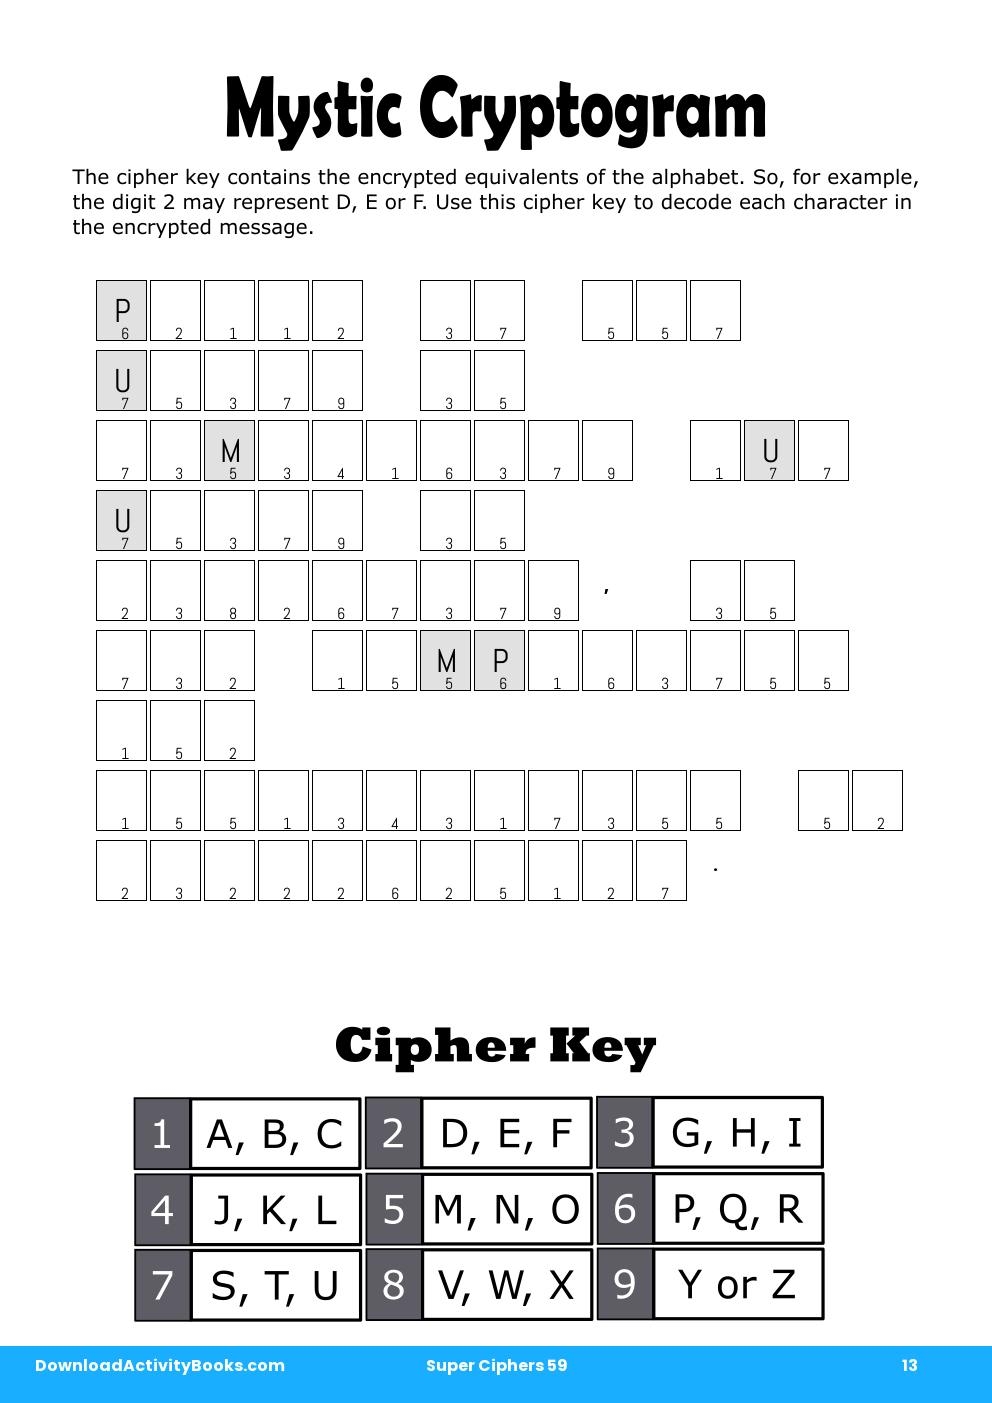 Mystic Cryptogram in Super Ciphers 59